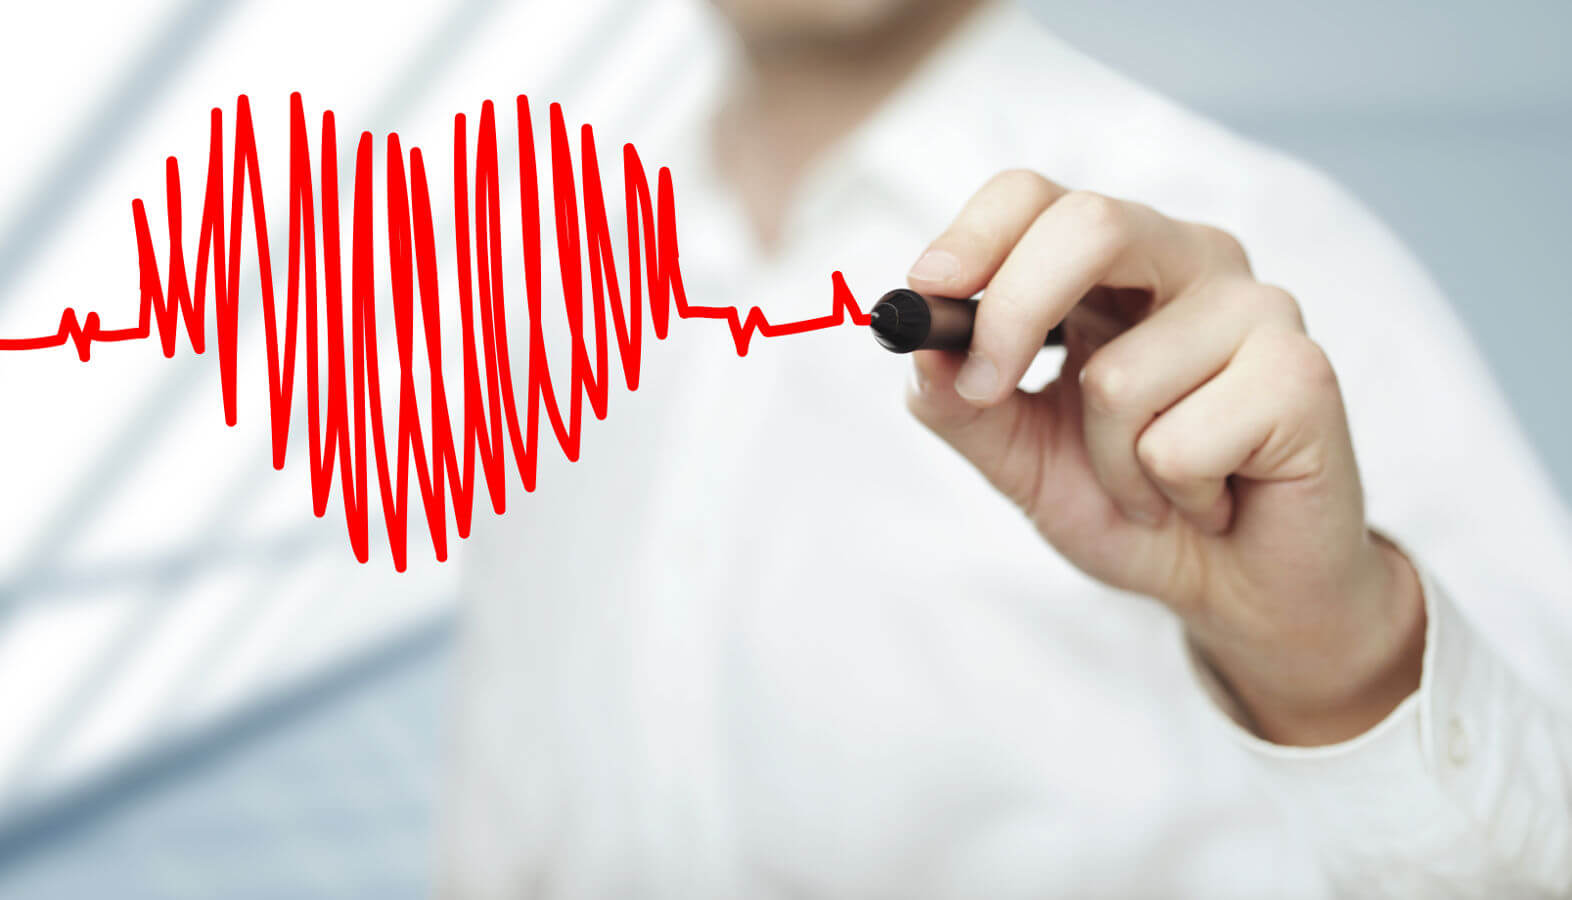 Kardiologie - treffende Diagnose stellen